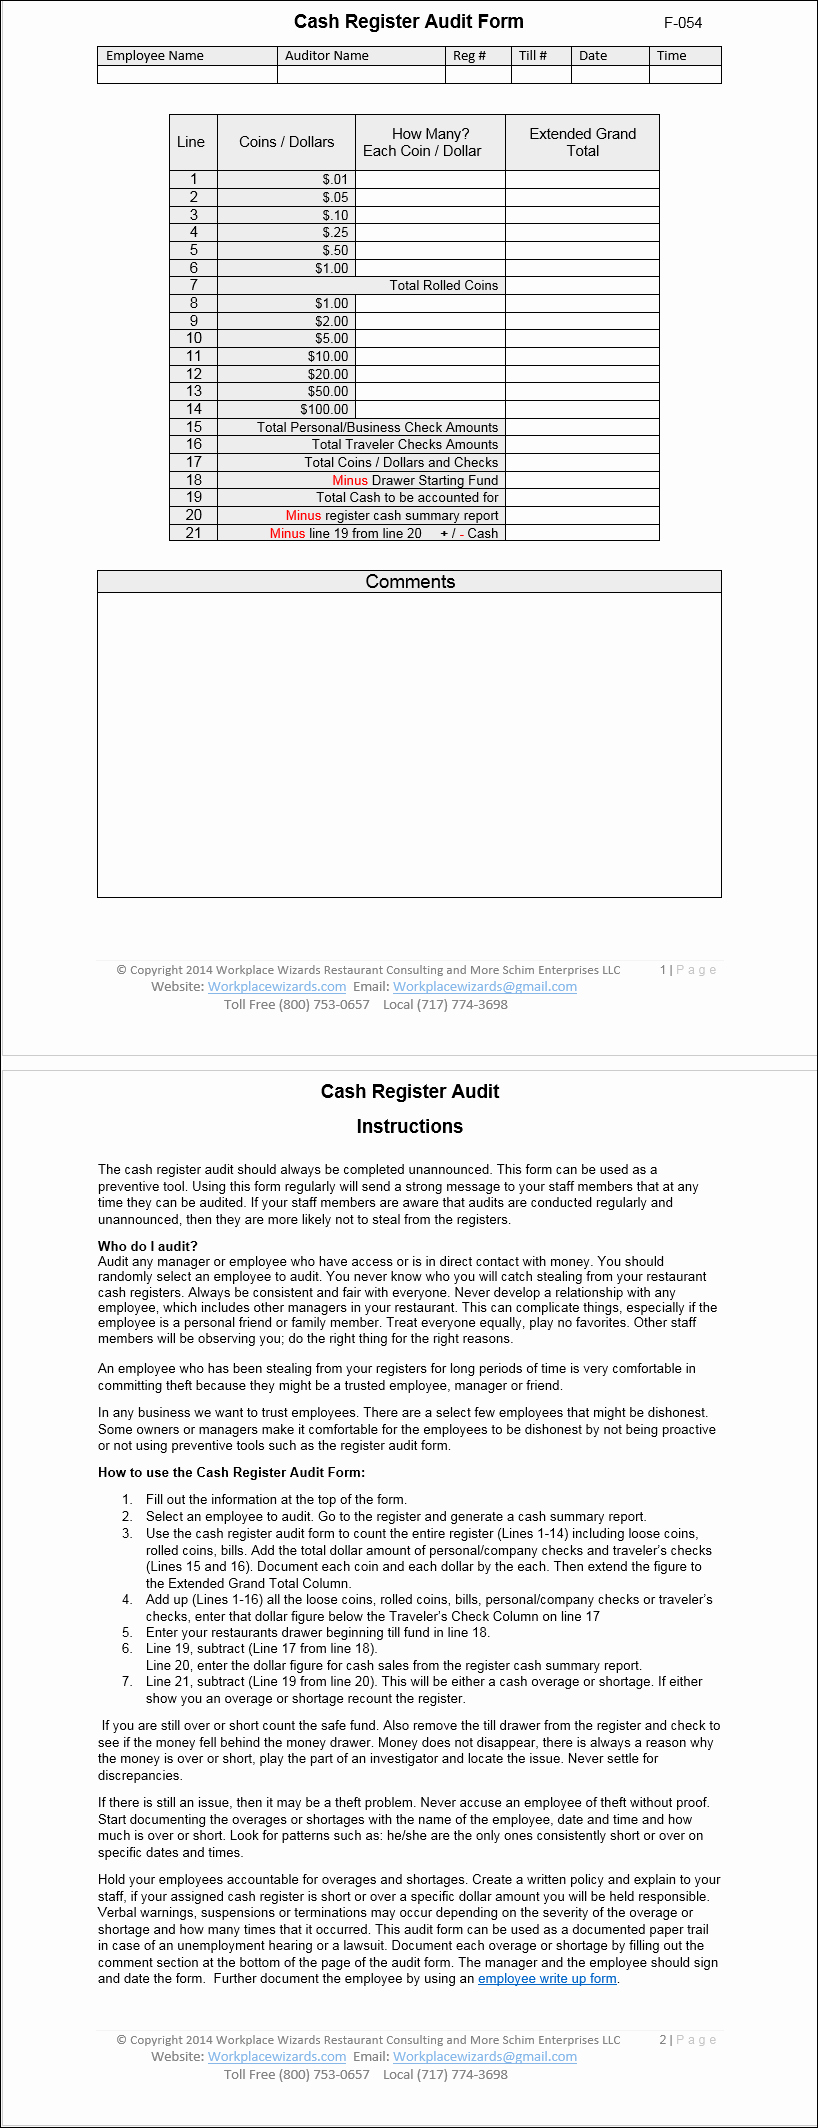 Cash Drawer Check Out Sheet Fresh Cash Register Audit form Workplace Wizards Restaurant